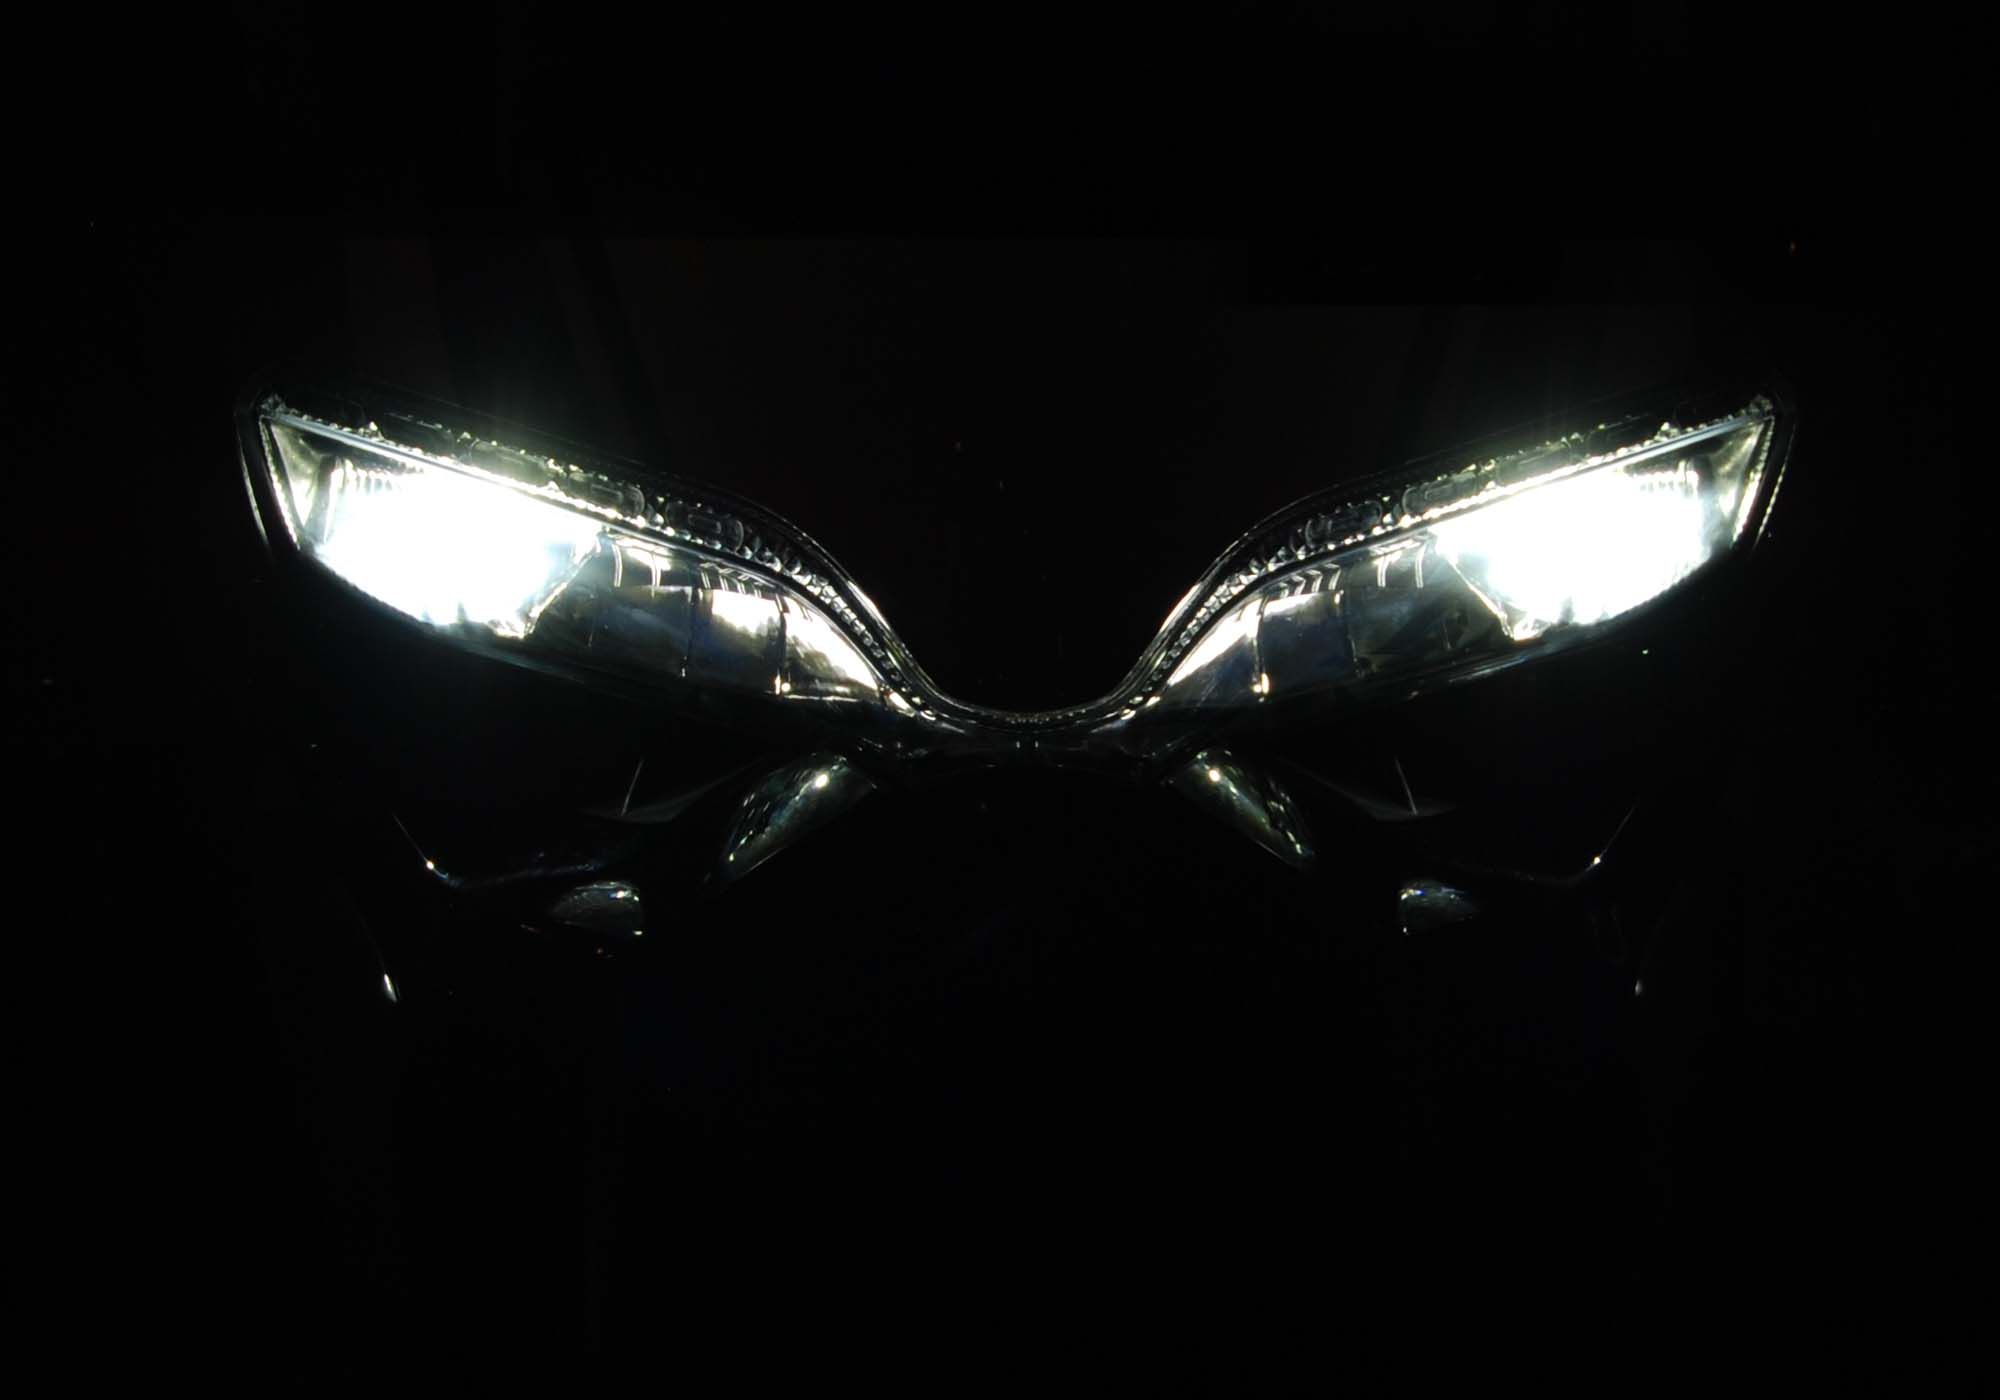 Ducati-1199-Panigale-S-Lights-Dark-Background-Wallpapers-HD.jpg